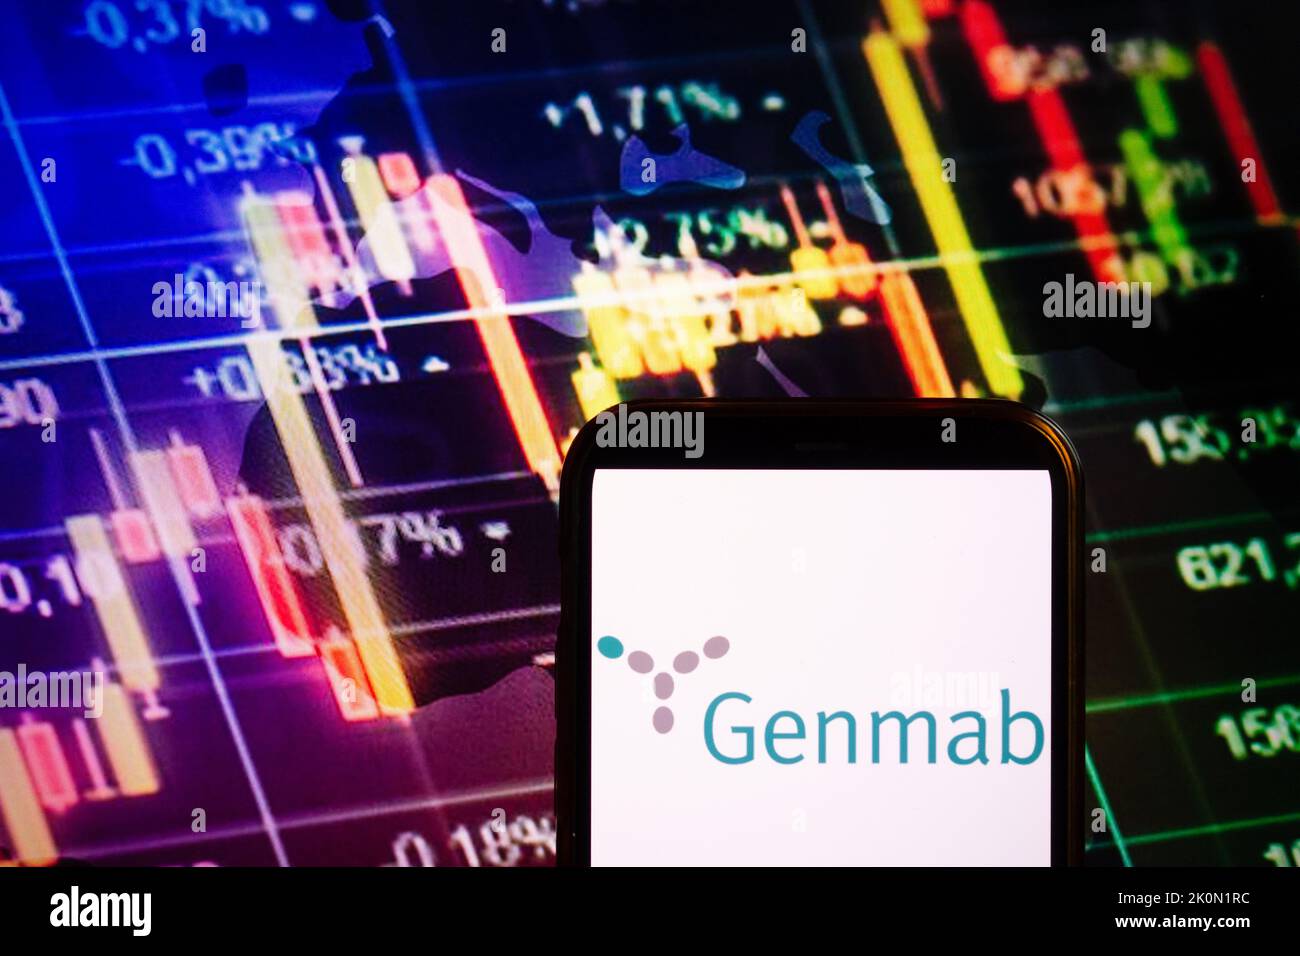 KONSKIE, POLAND - September 10, 2022: Smartphone displaying logo of Genmab company on stock exchange diagram background Stock Photo